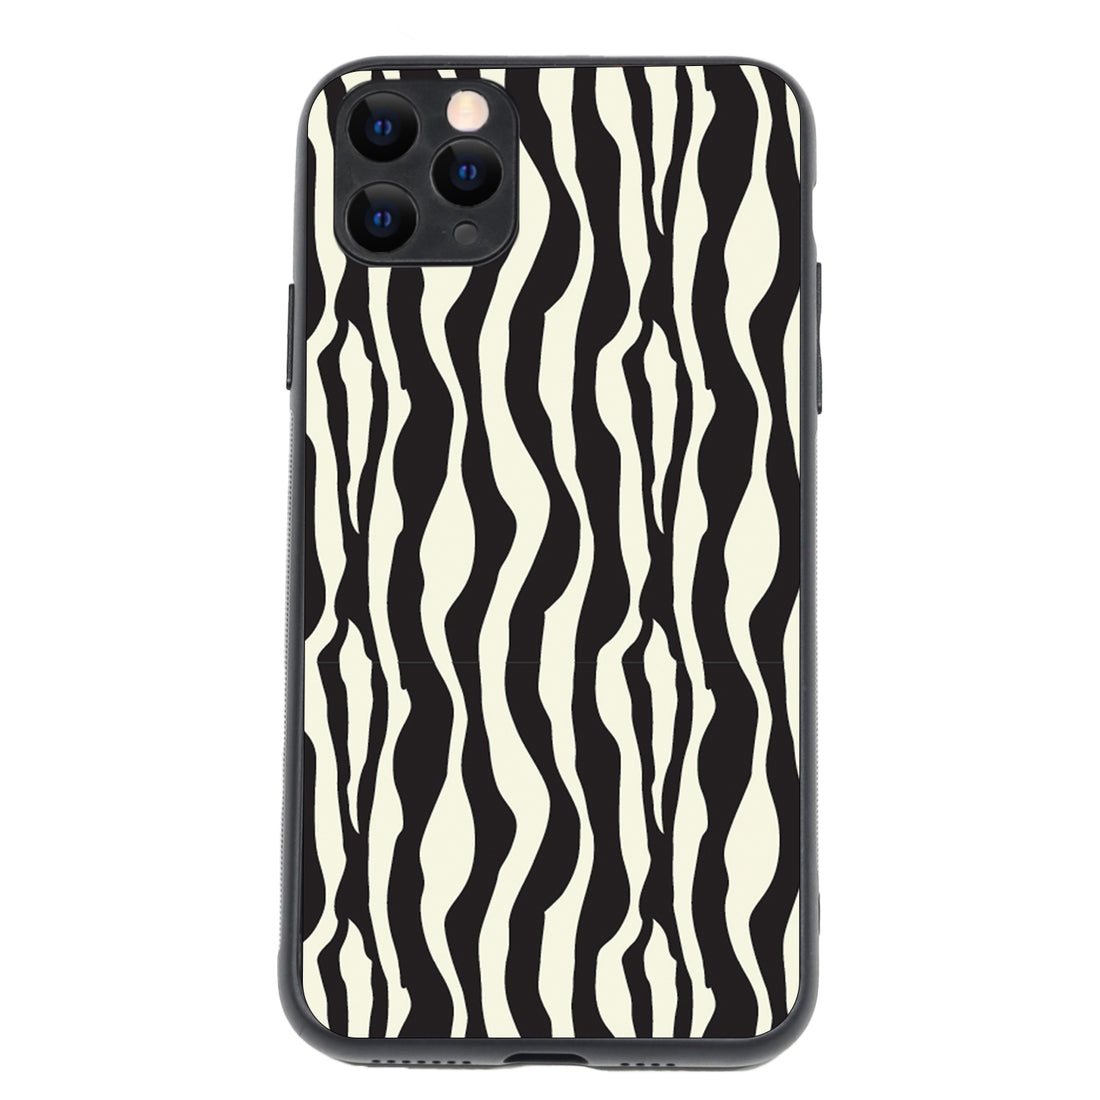 Zebra Animal Print iPhone 11 Pro Max Case